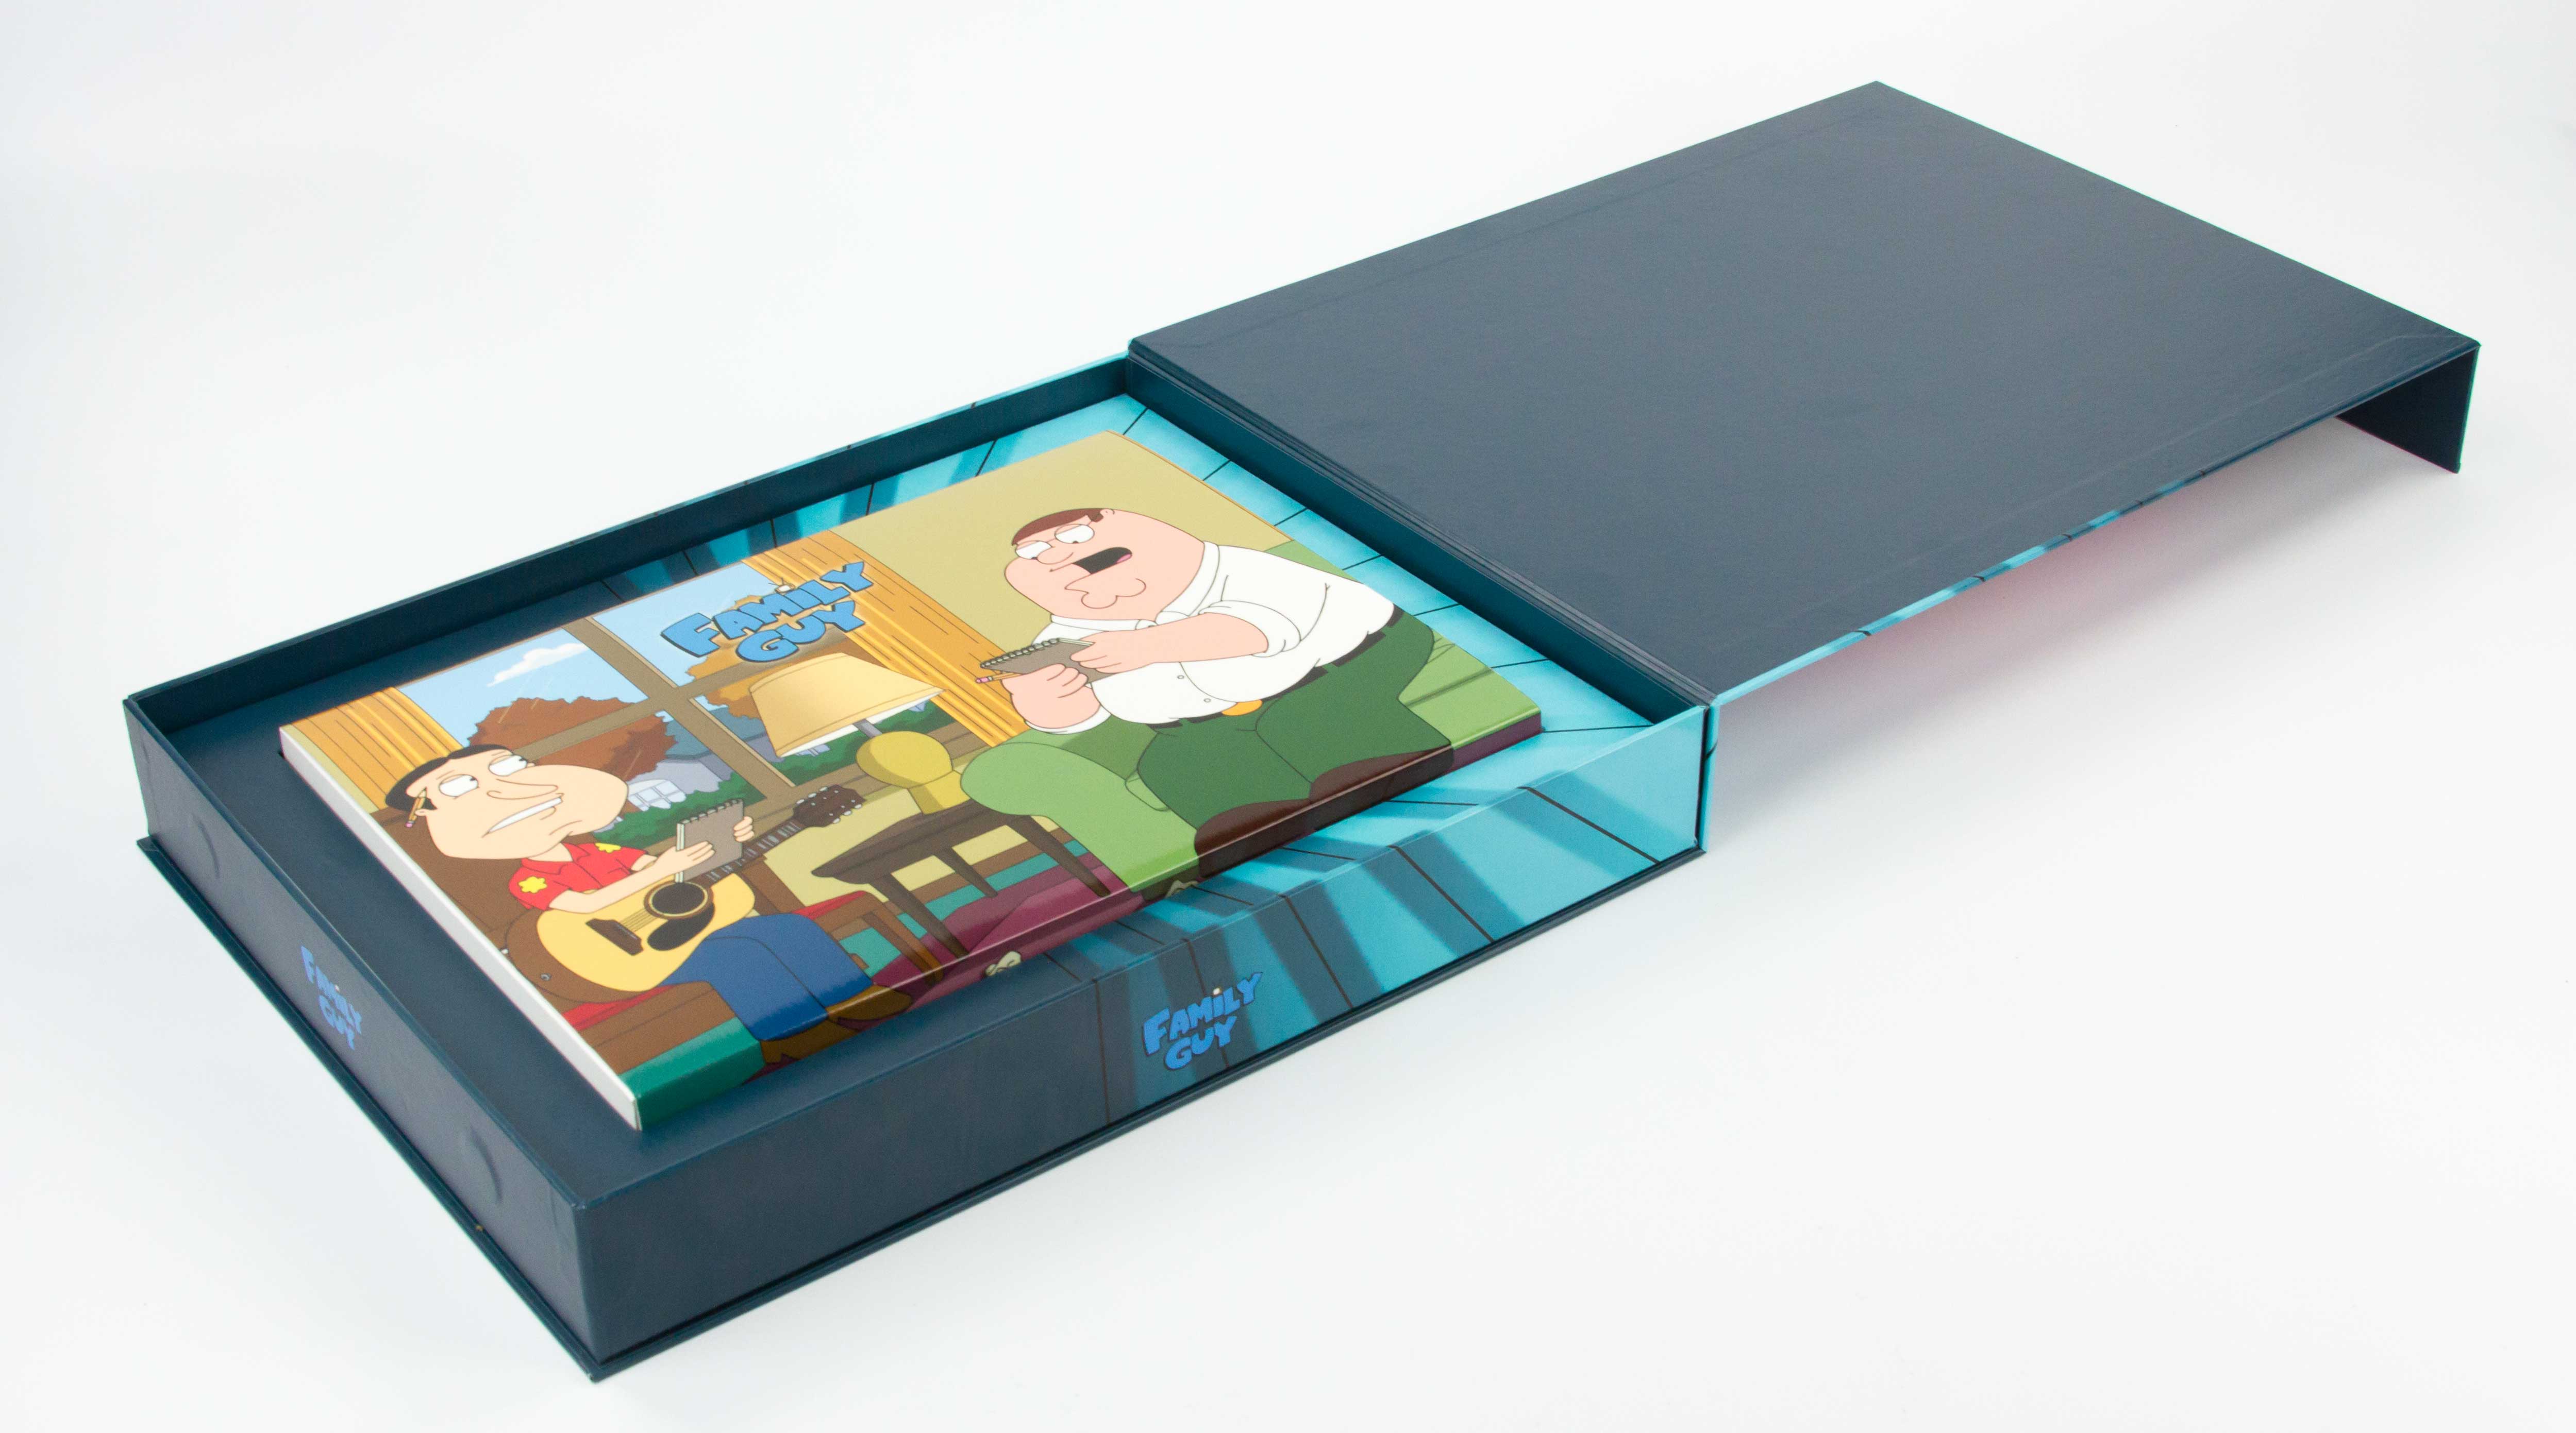 Custom box created for Apple iPad with a custom designed device sleeve